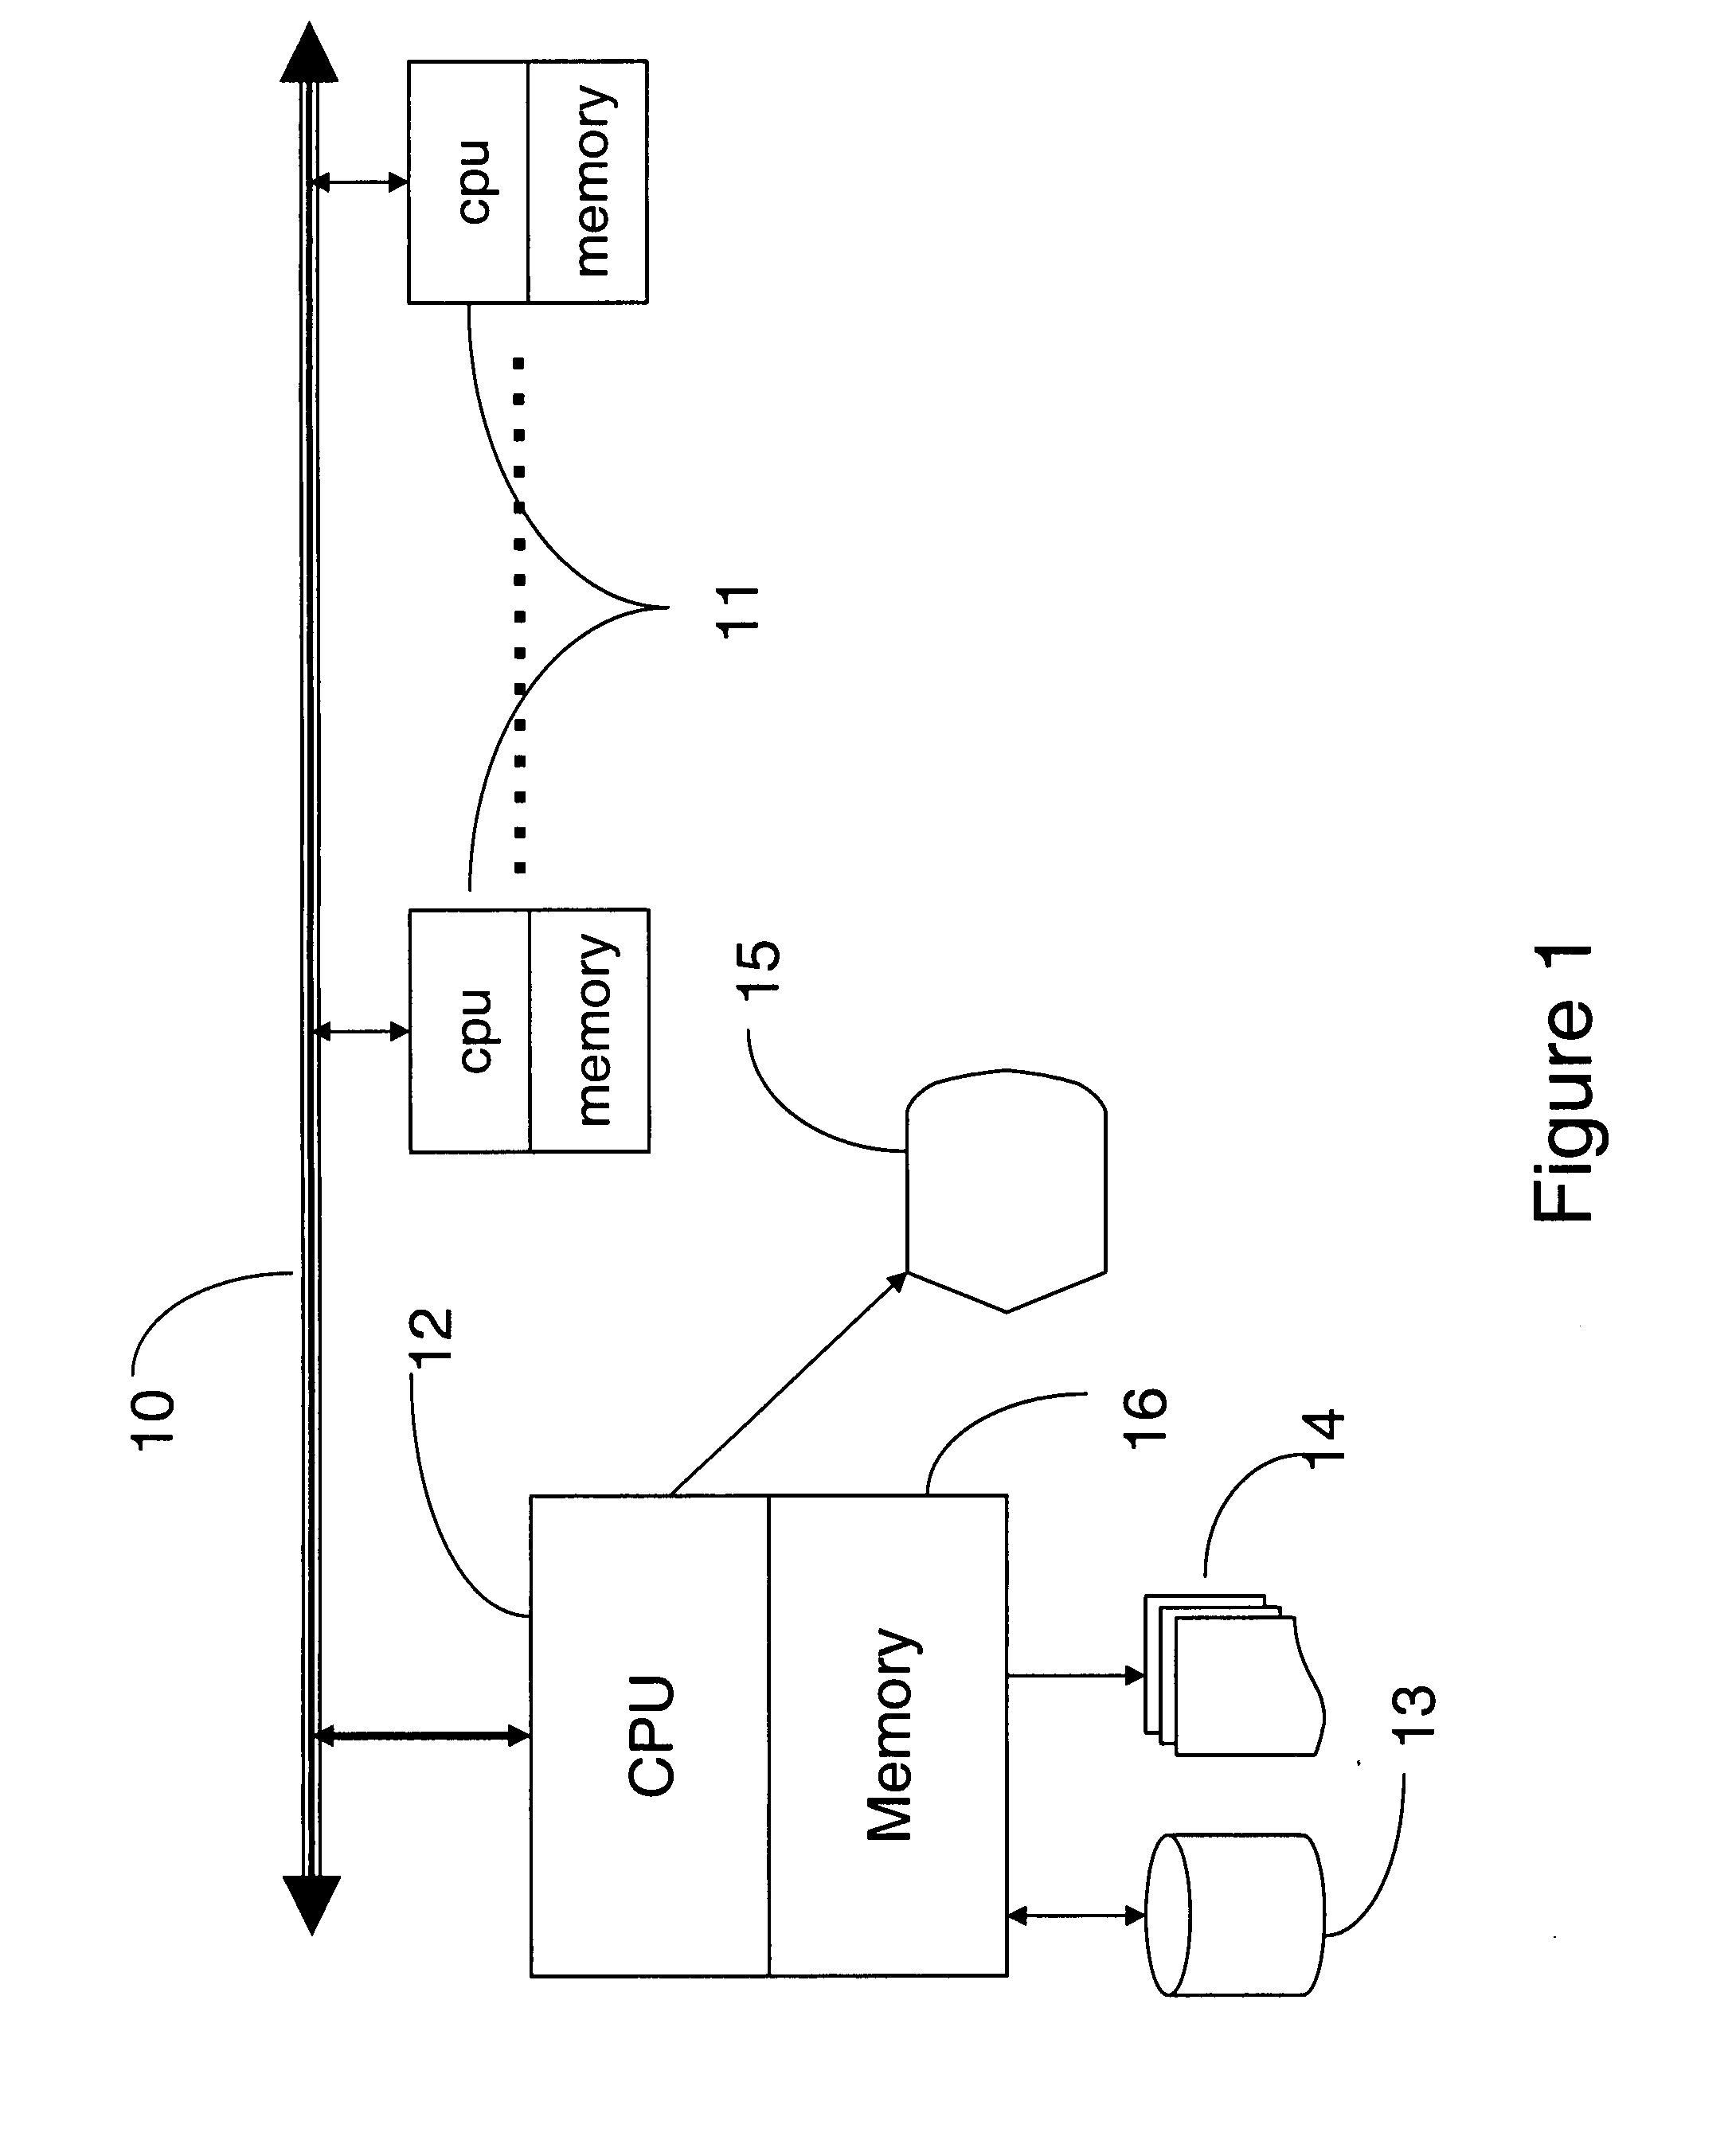 Parallel circuit simulation techniques